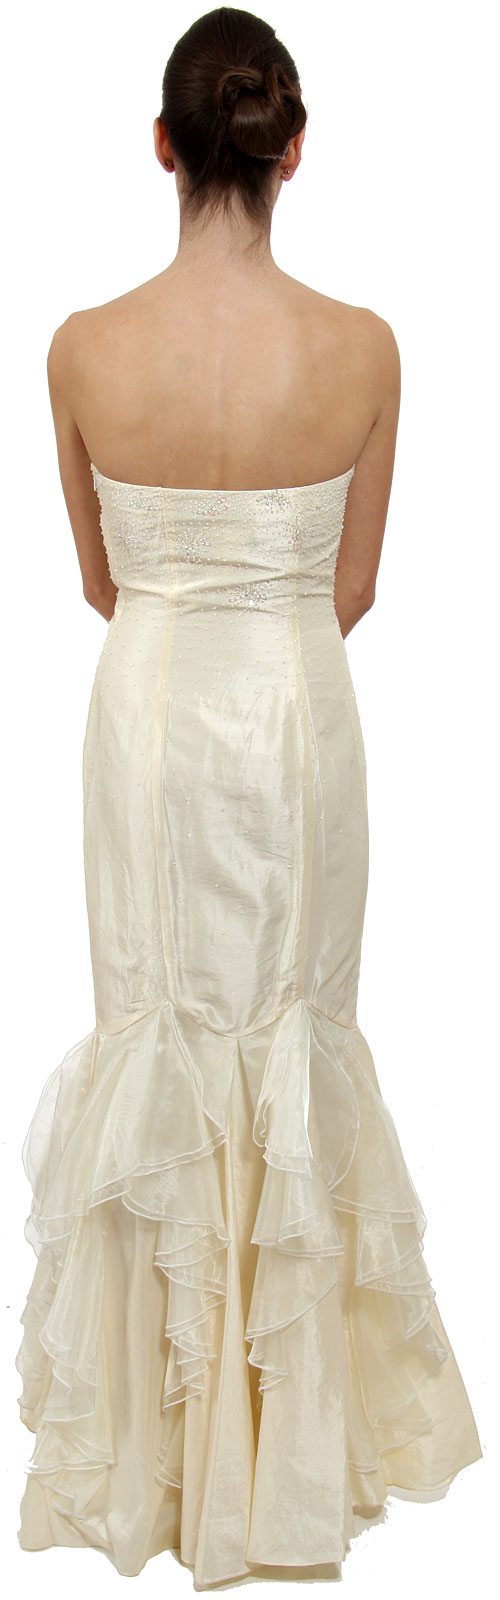 Back image of Strapless Beaded Mermaid Style Formal Wedding Dress